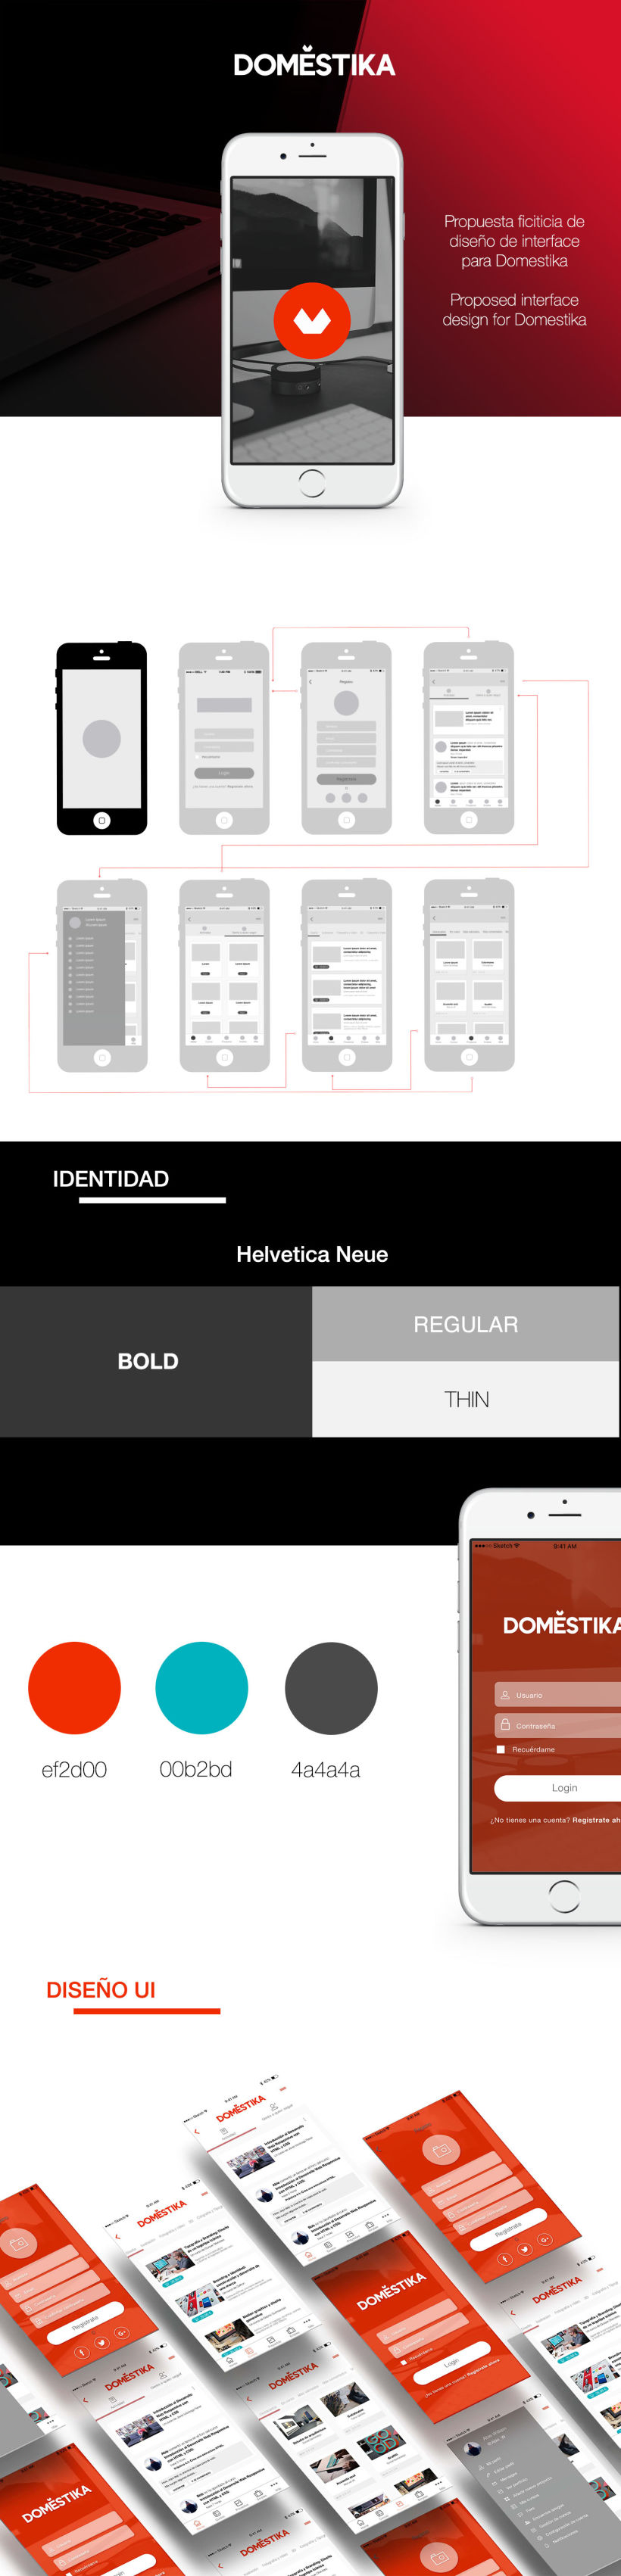 Domestika - Propuesta app mobile -1